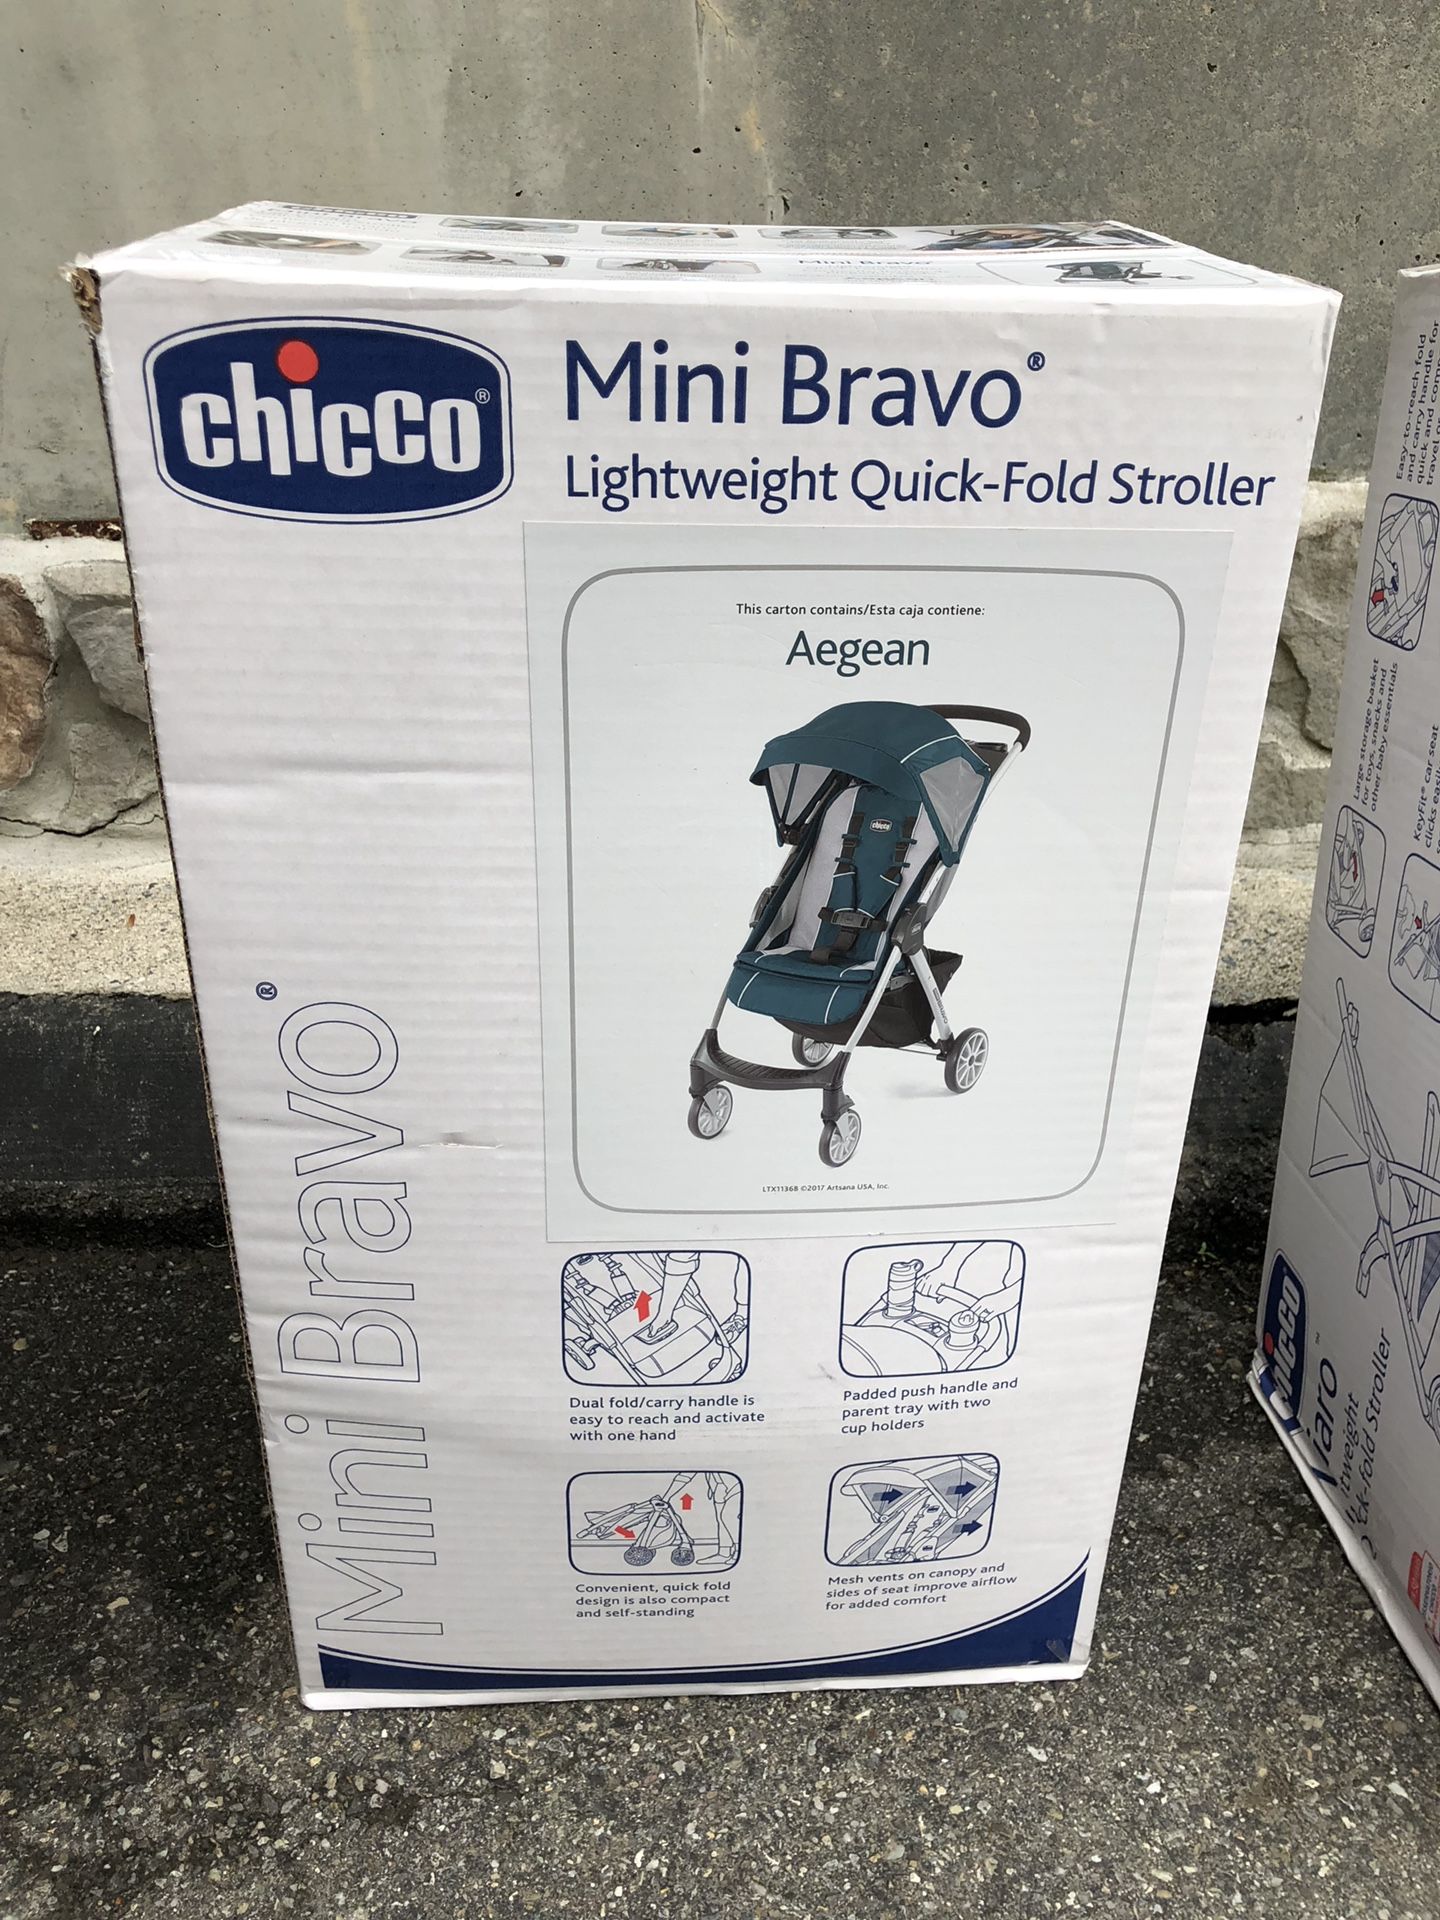 Chicco Mino Bravo Stroller